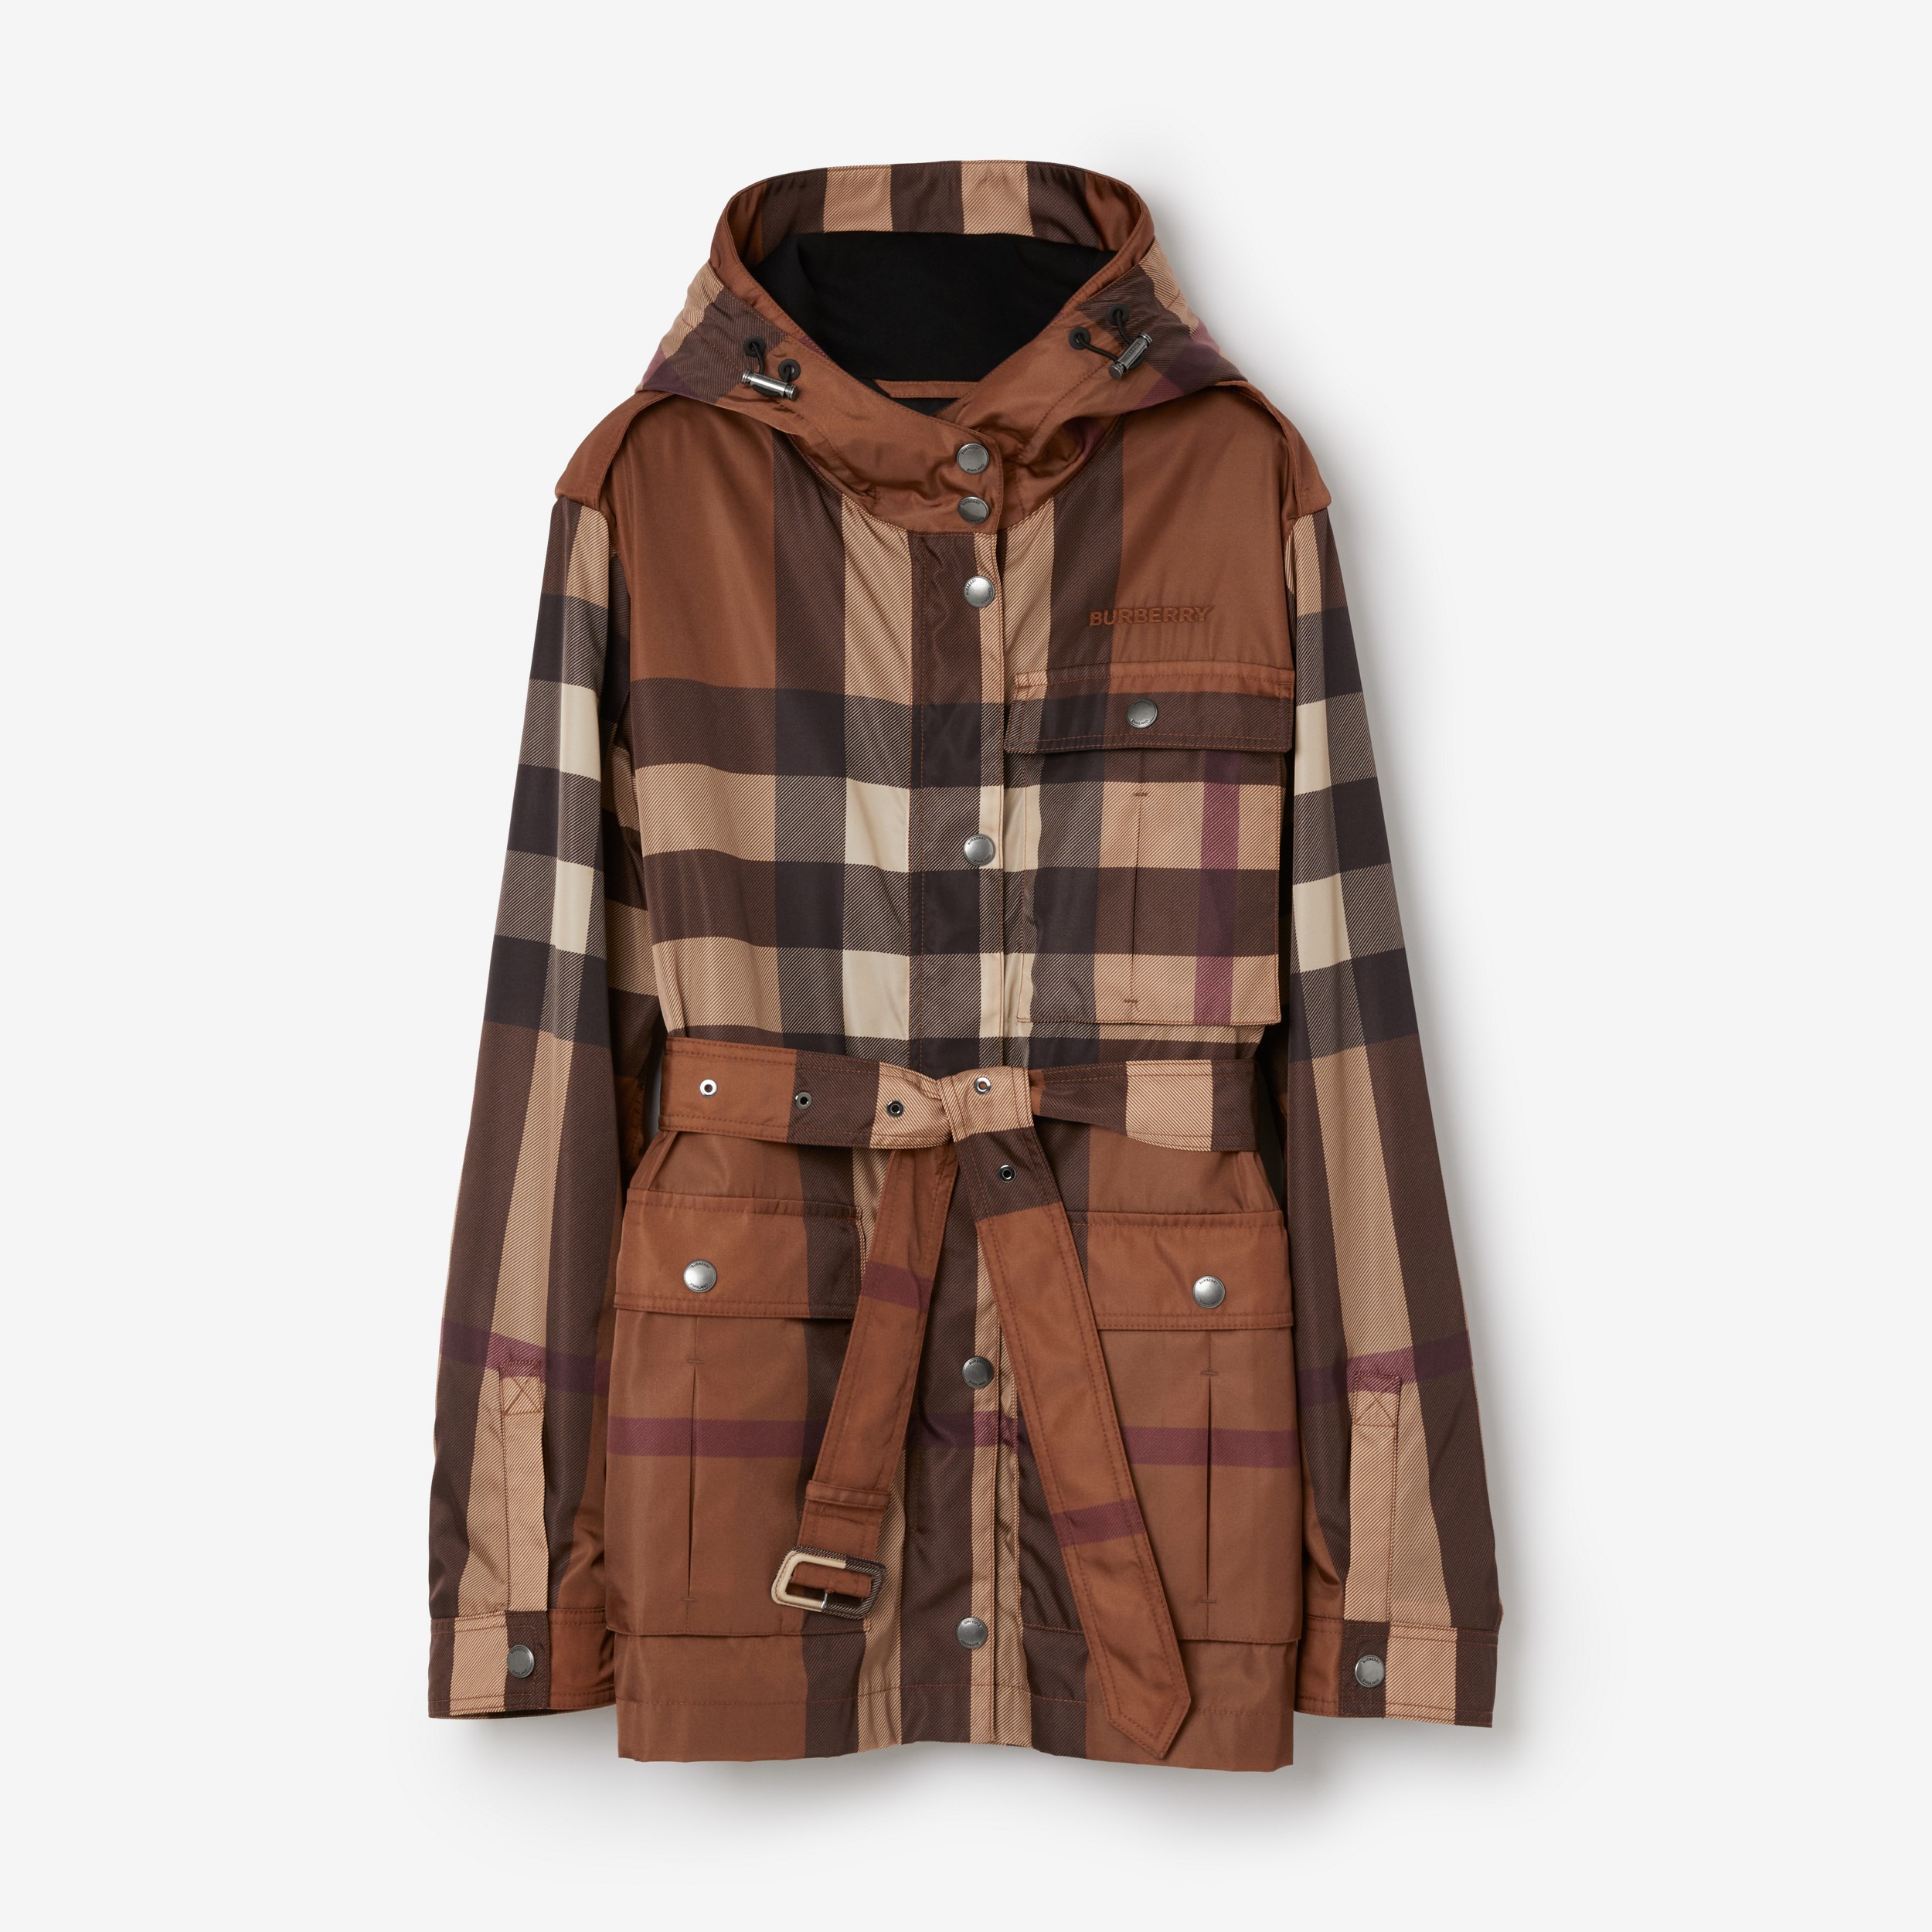 Doe mee Samenhangend Oost Check Nylon Hooded Field Jacket in Dark Birch Brown - Women | Burberry®  Official